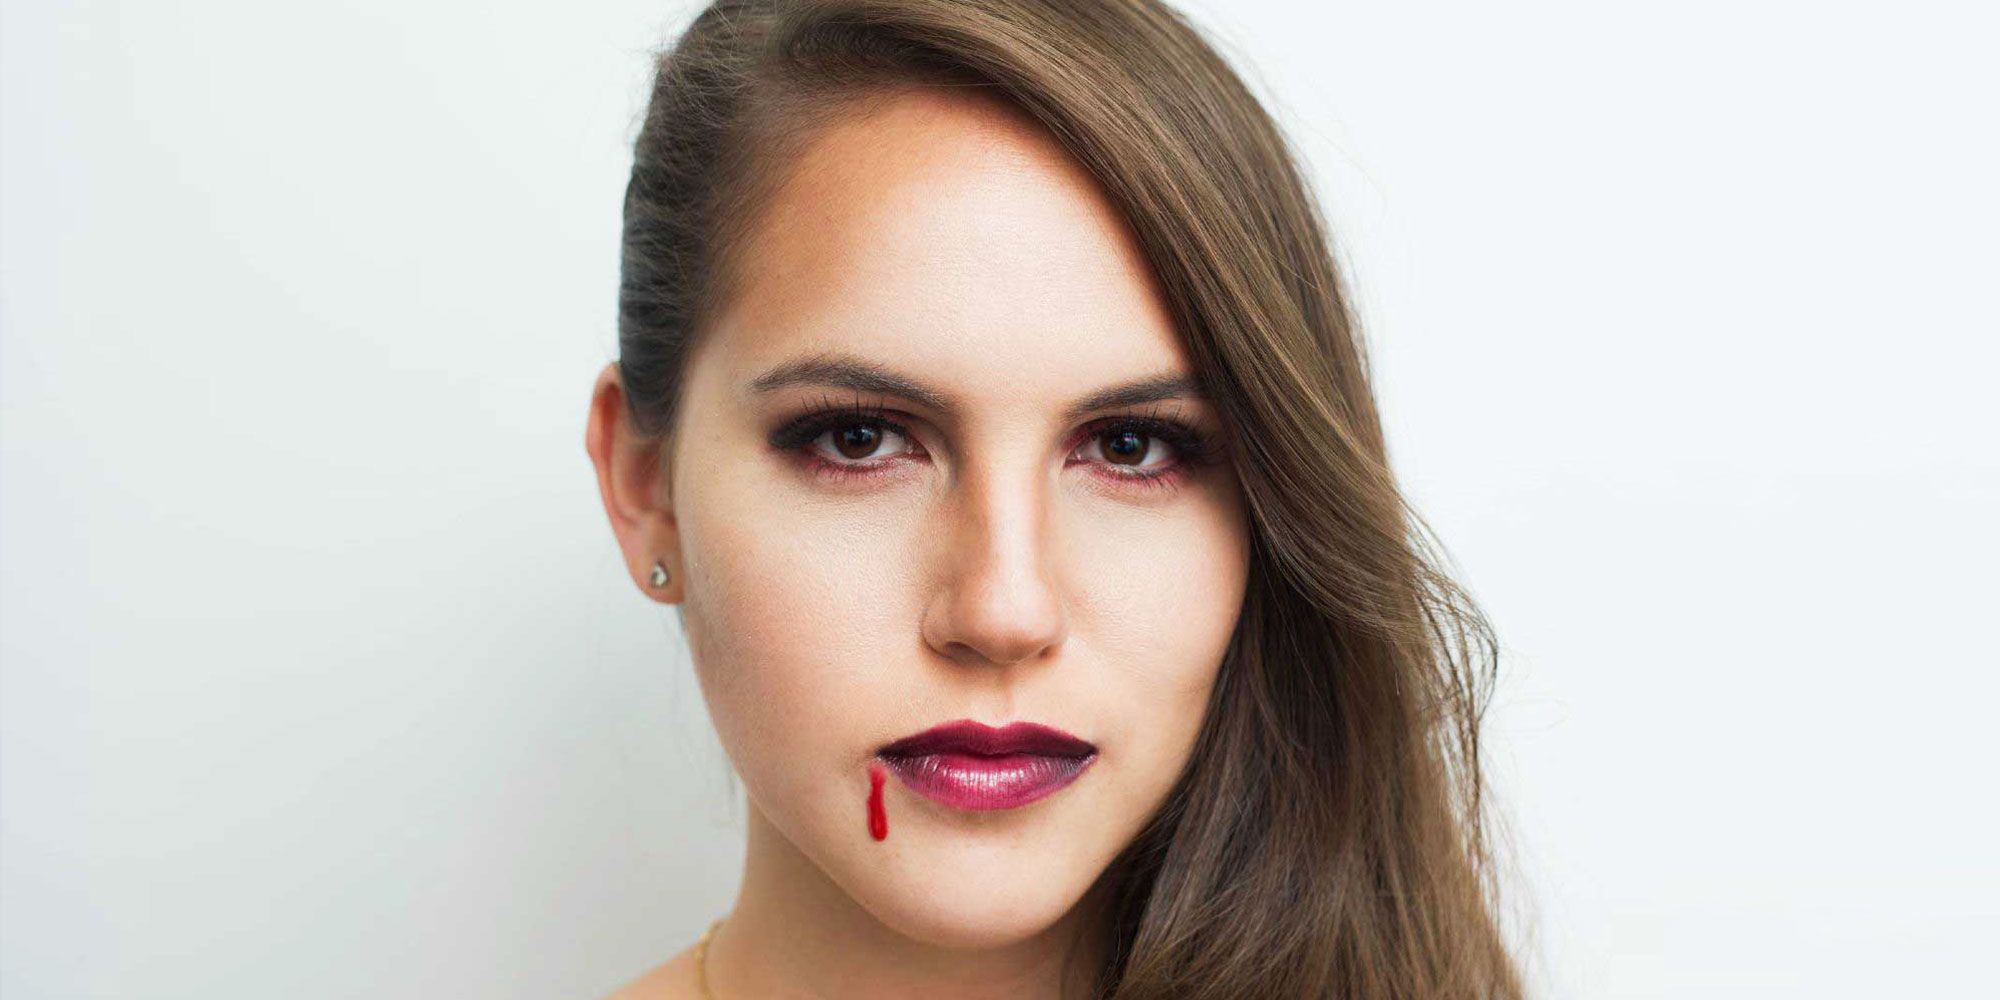 Makeup Tutorial for Halloween 2020 - How to Do Vampire Makeup